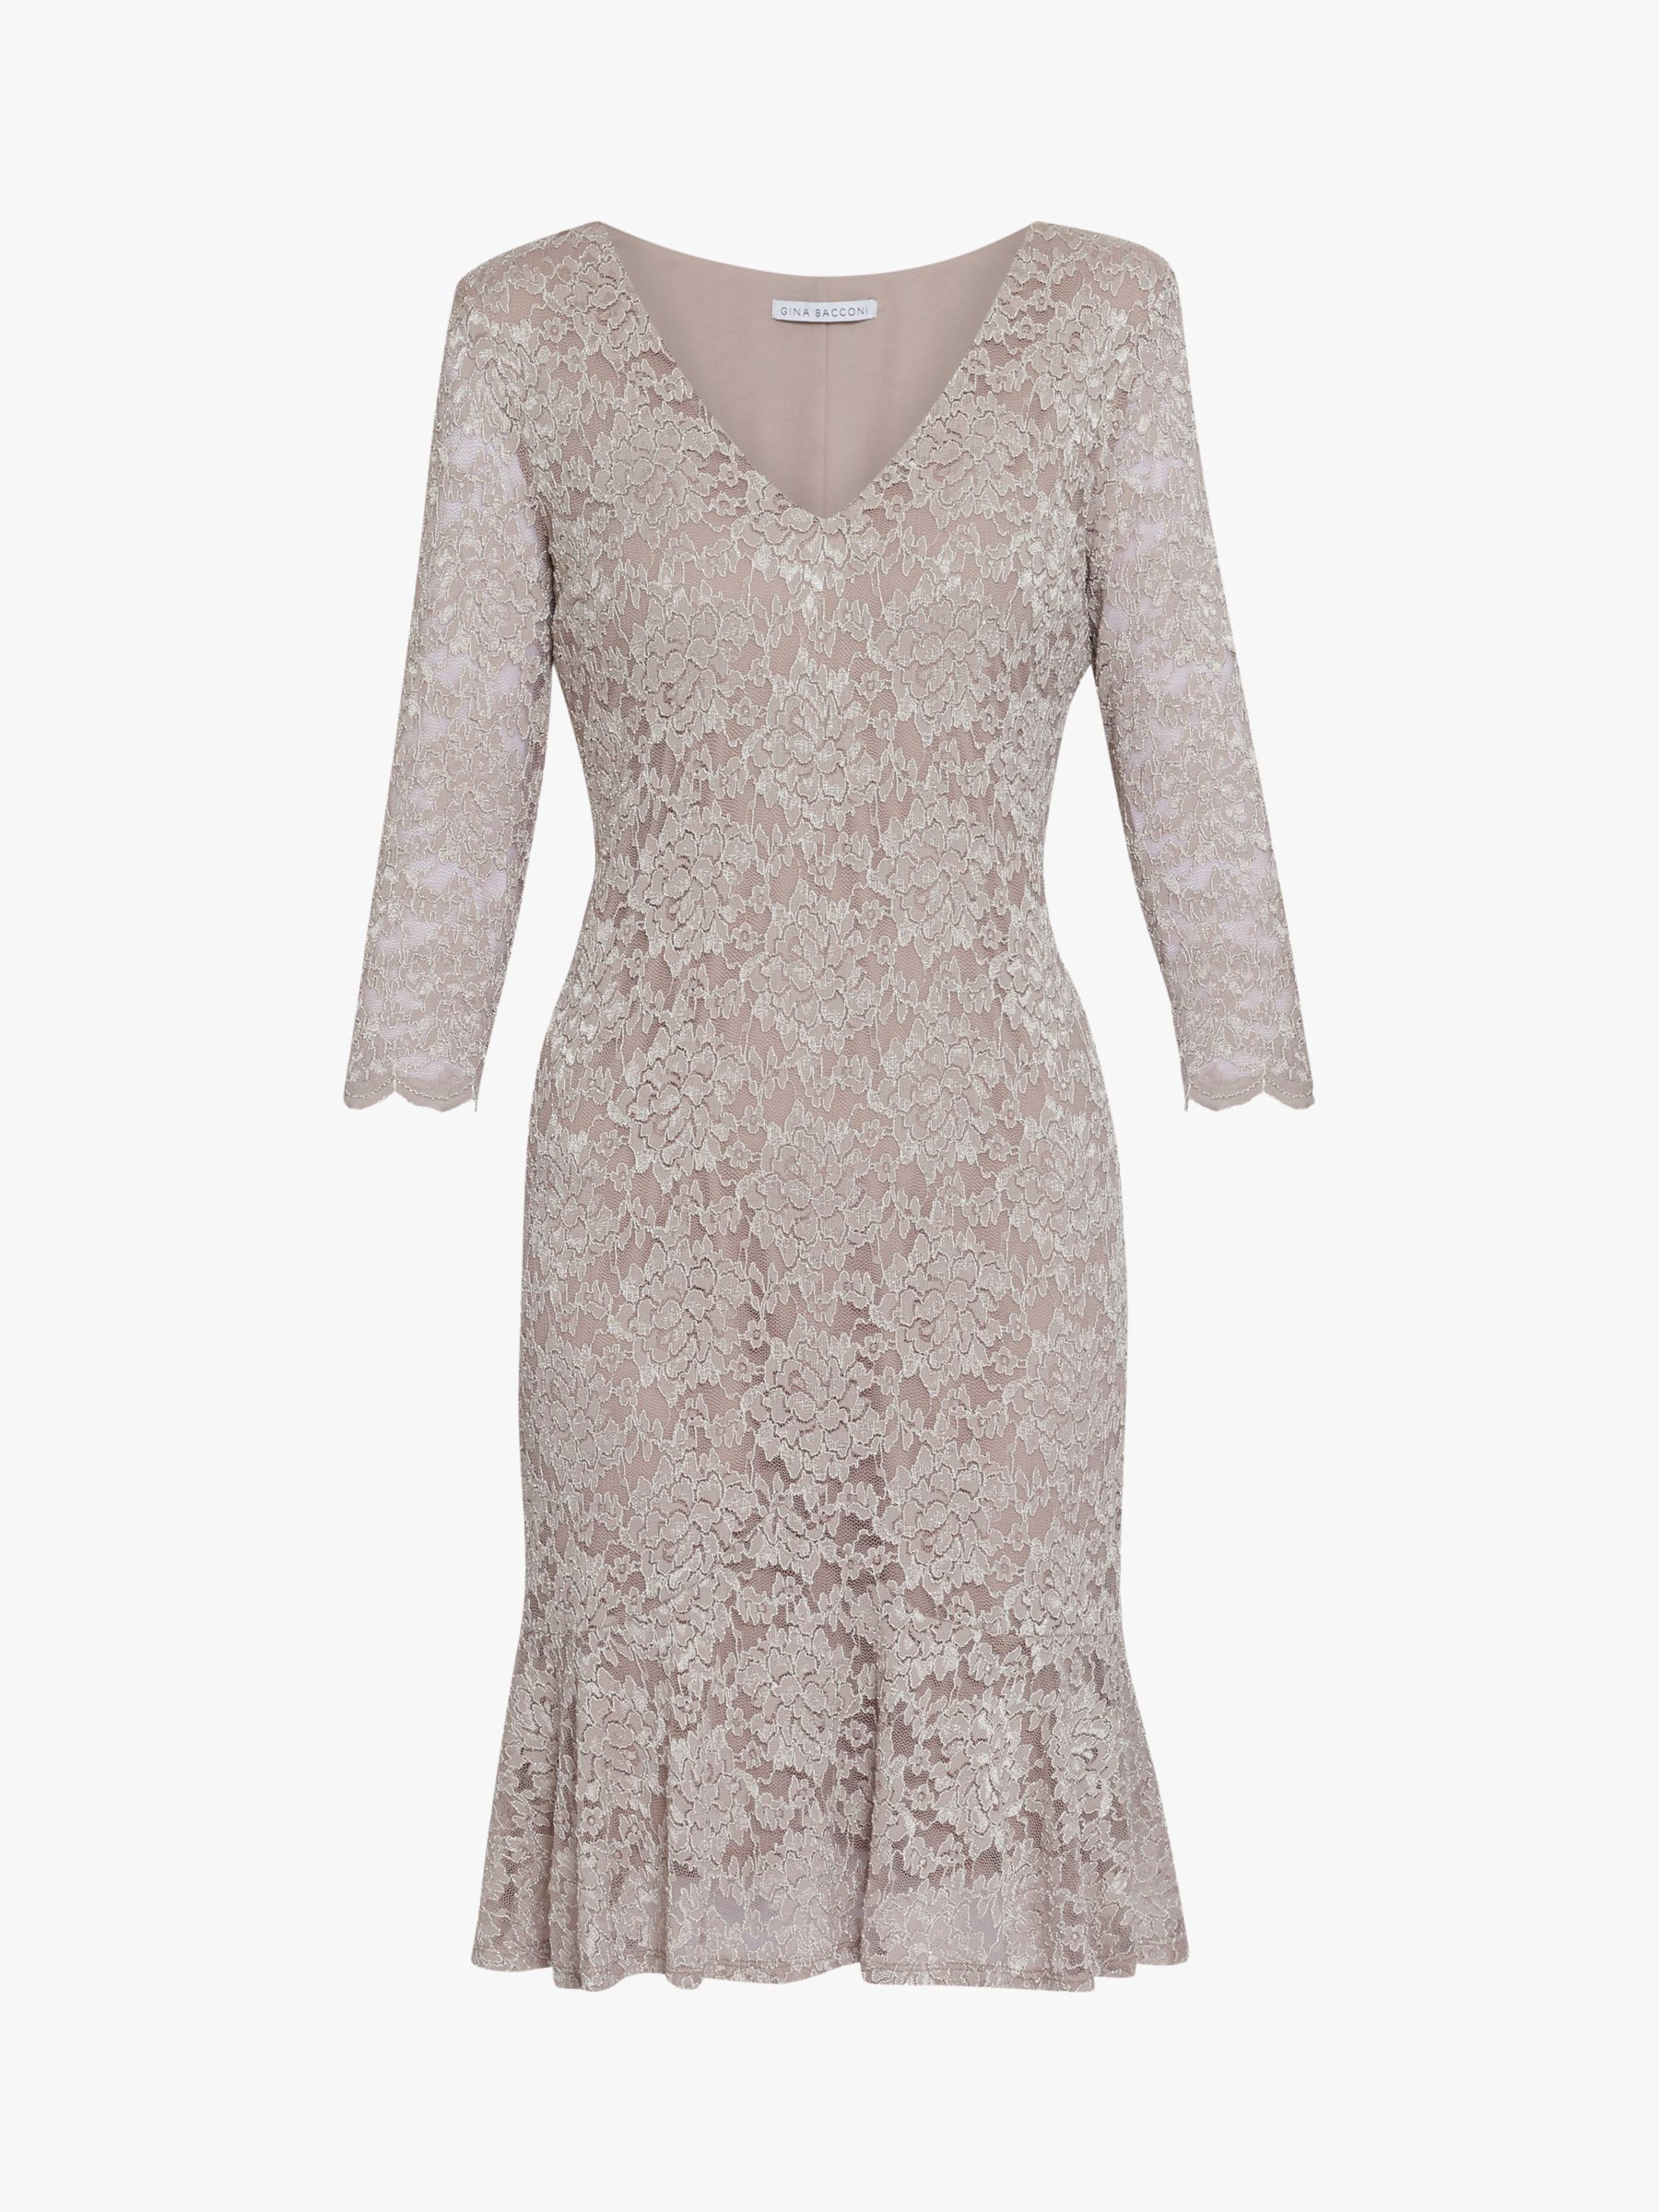 Gina Bacconi Nadalie Tailored Lace Dress at John Lewis & Partners